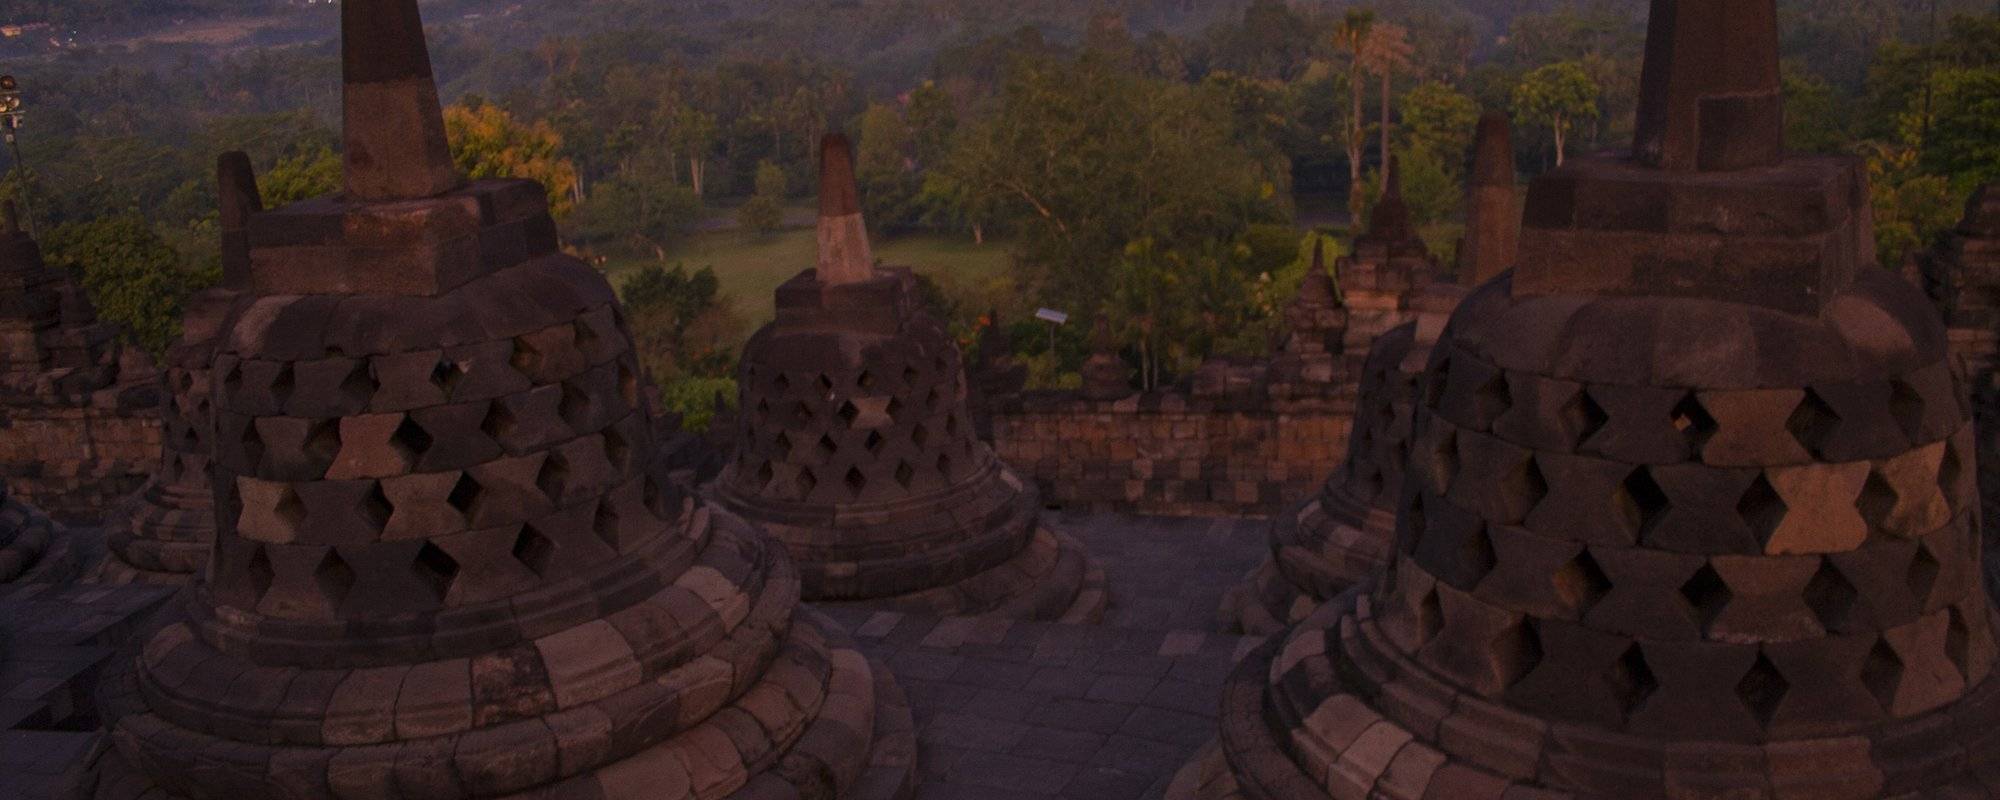 Indonesia #16: The best way(s) to visit Borobudur!